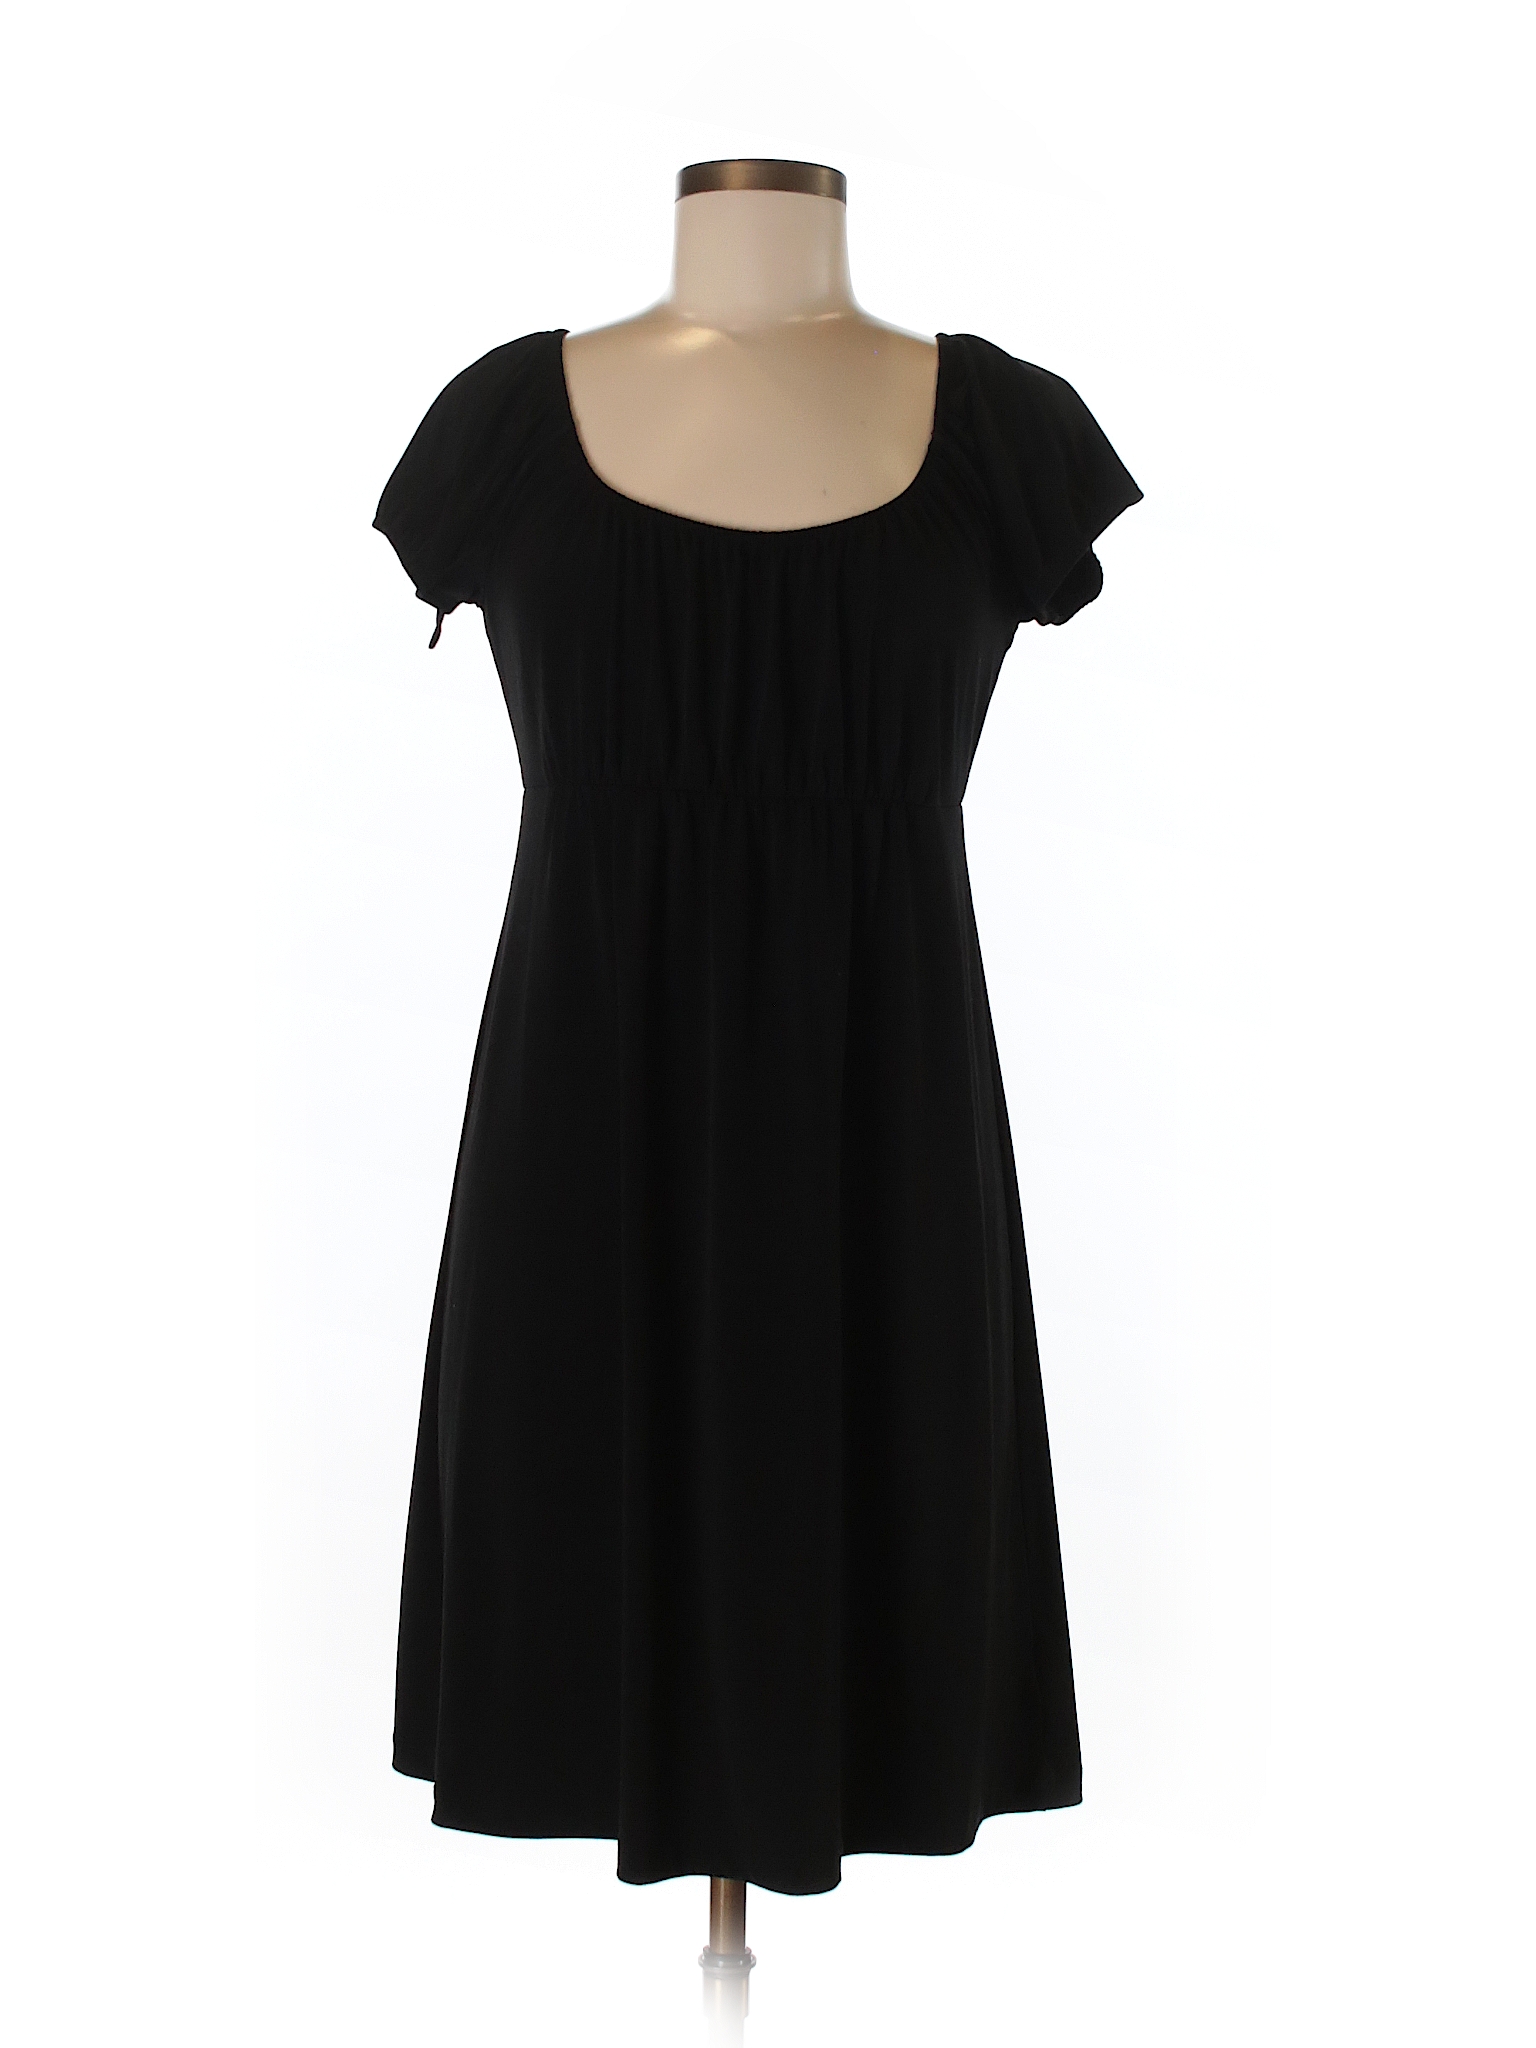 MICHAEL Michael Kors Solid Black Casual Dress Size M - 74% off | thredUP